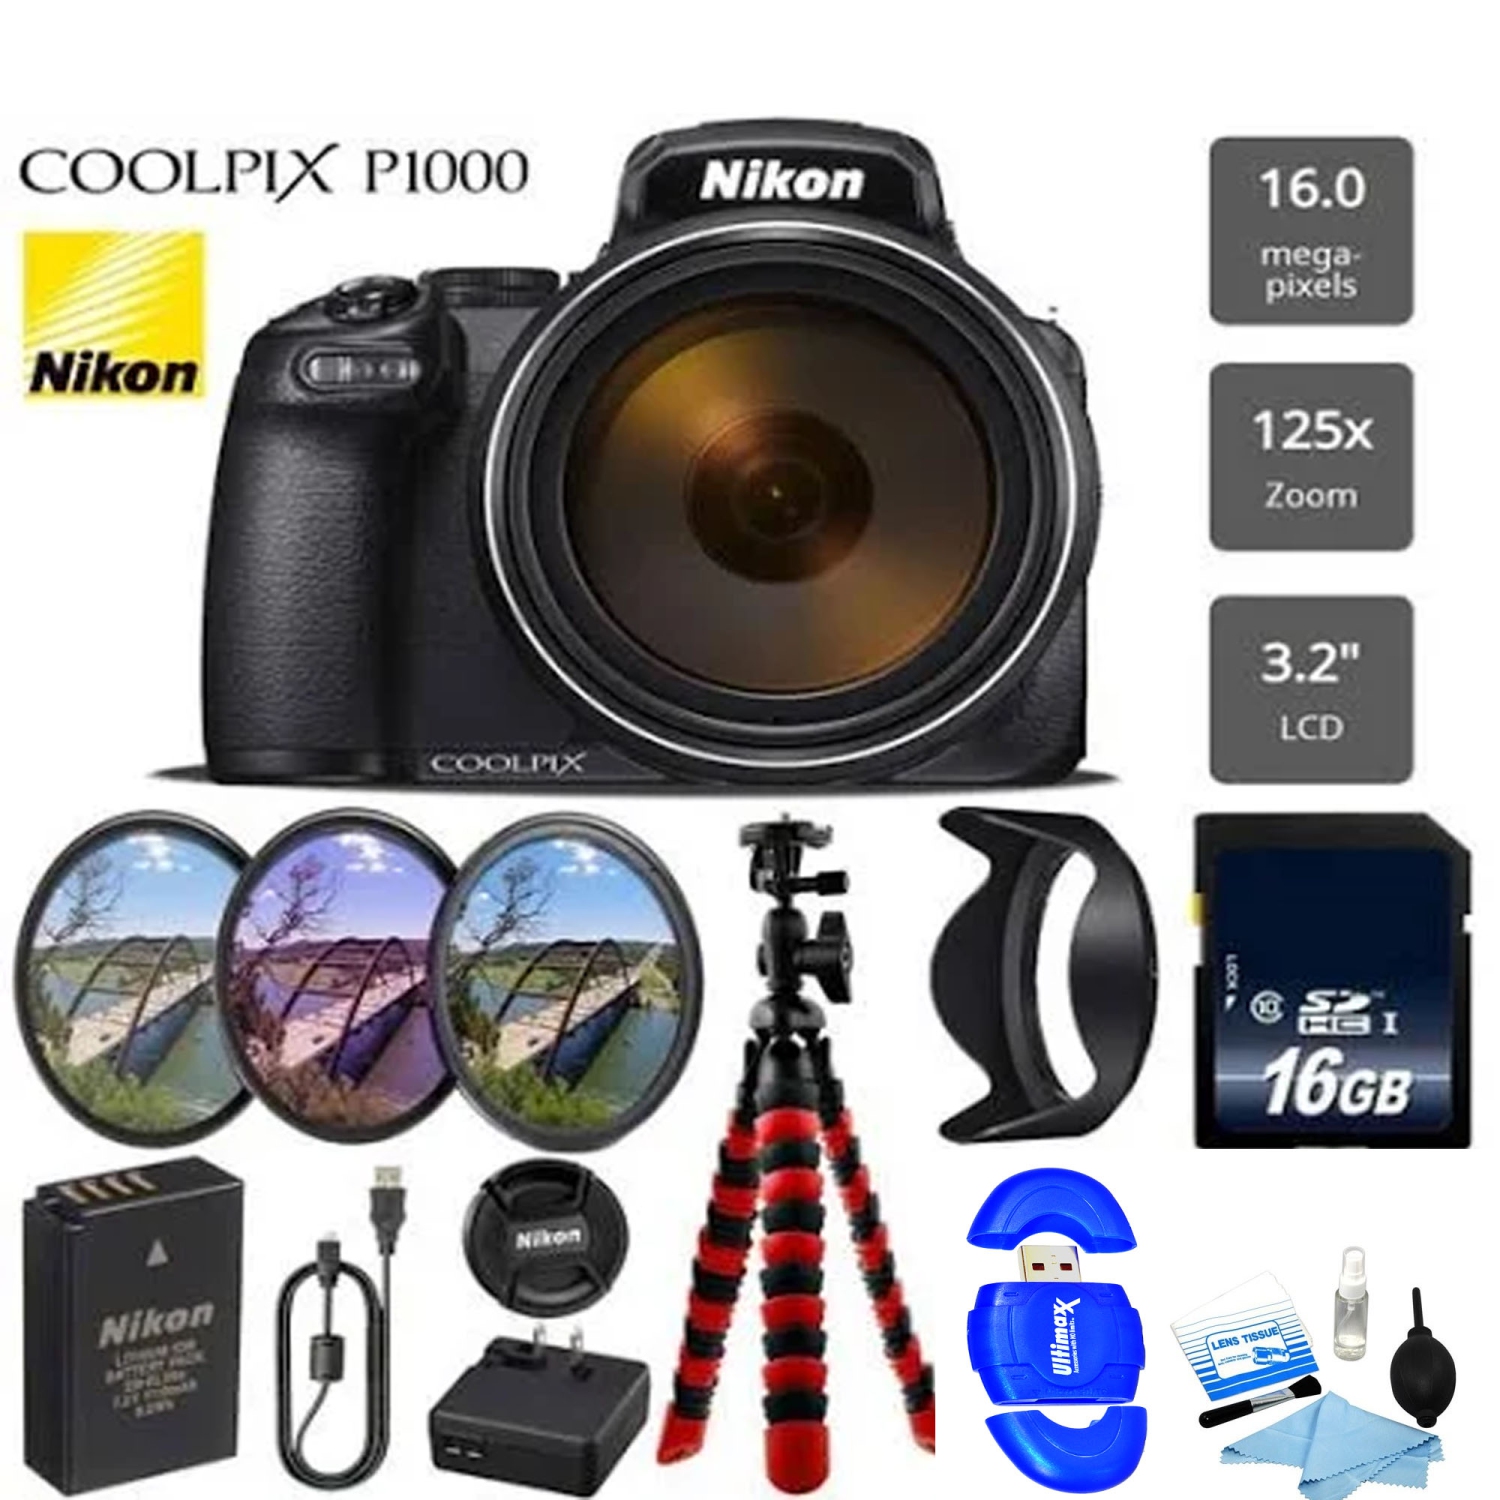 Nikon Coolpix P1000 16MP 125x Super-Zoom Digital Camera + 16GB & Additional Accessories Bundle Package - US Version w/ Seller Warranty